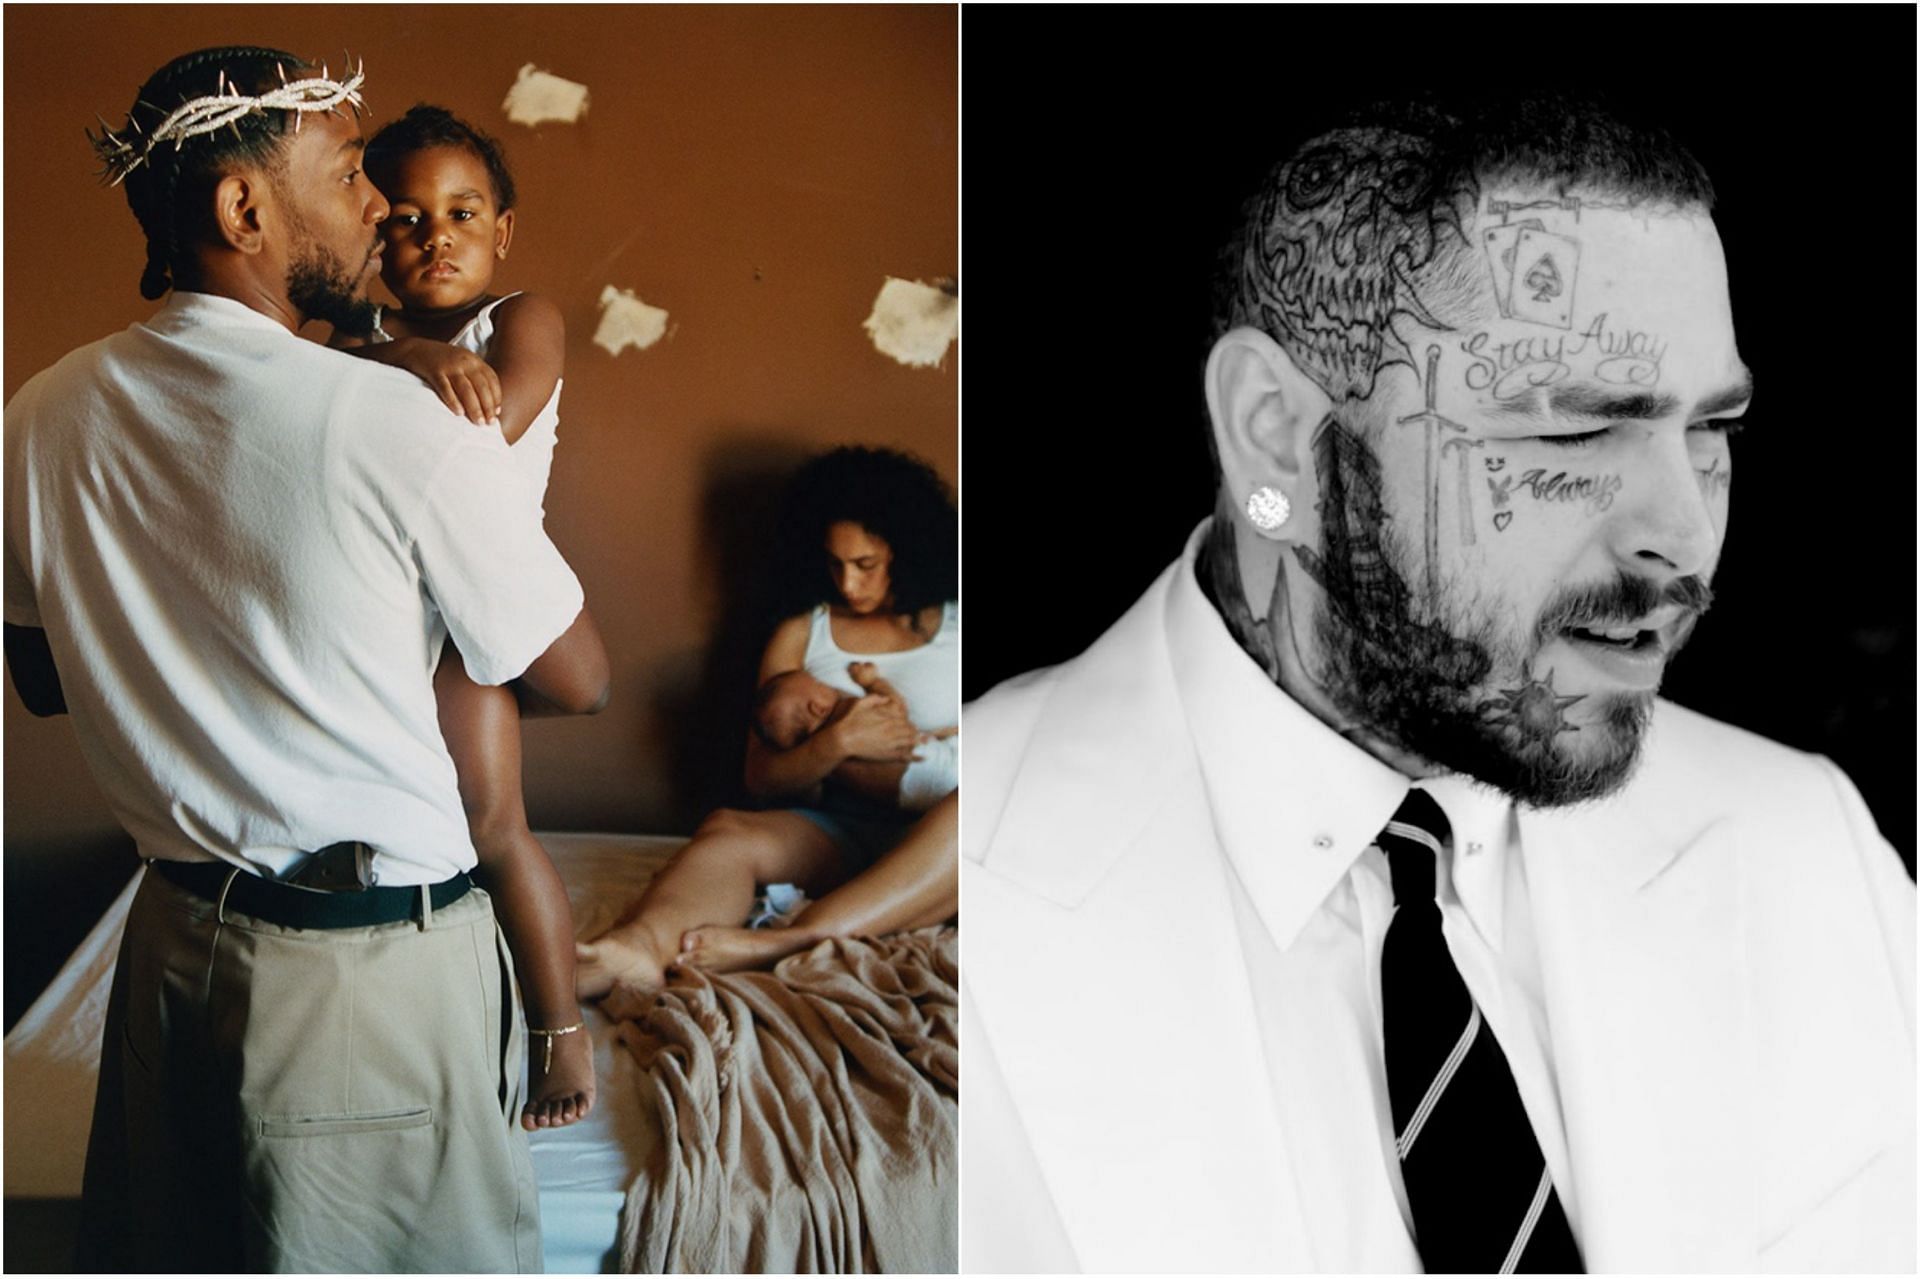 Kendrick Lamar on left (Image via Instagram/@kendricklamar) and Post Malone on right (Image via YouTube/Post Malone)